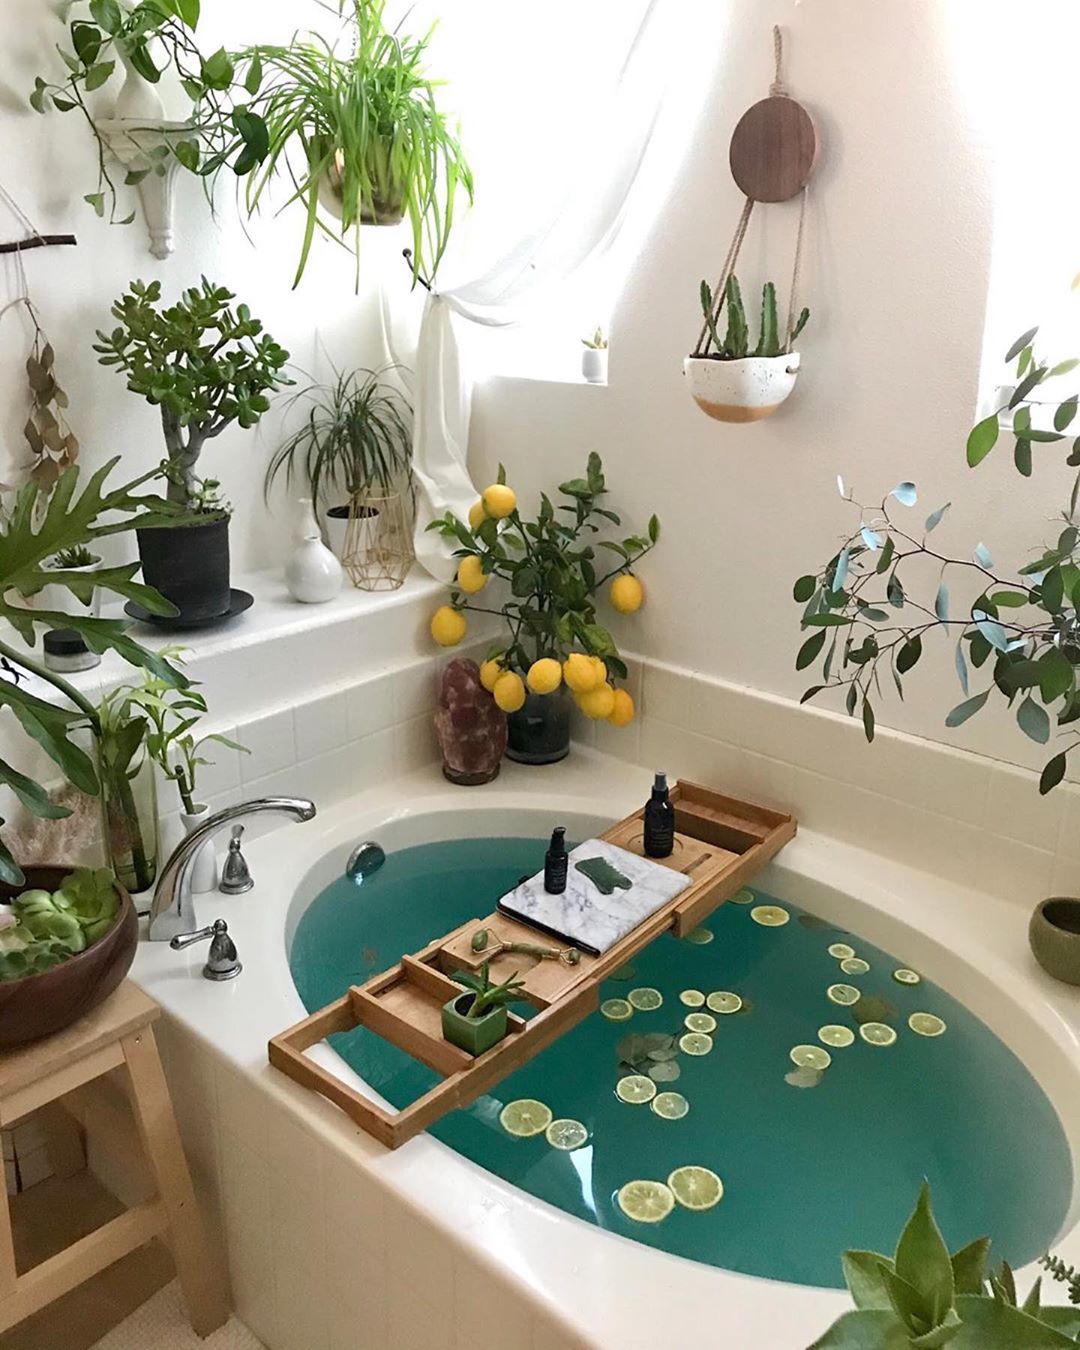 Bathtub surrounded by plants. Photo by Instagram user @biodara